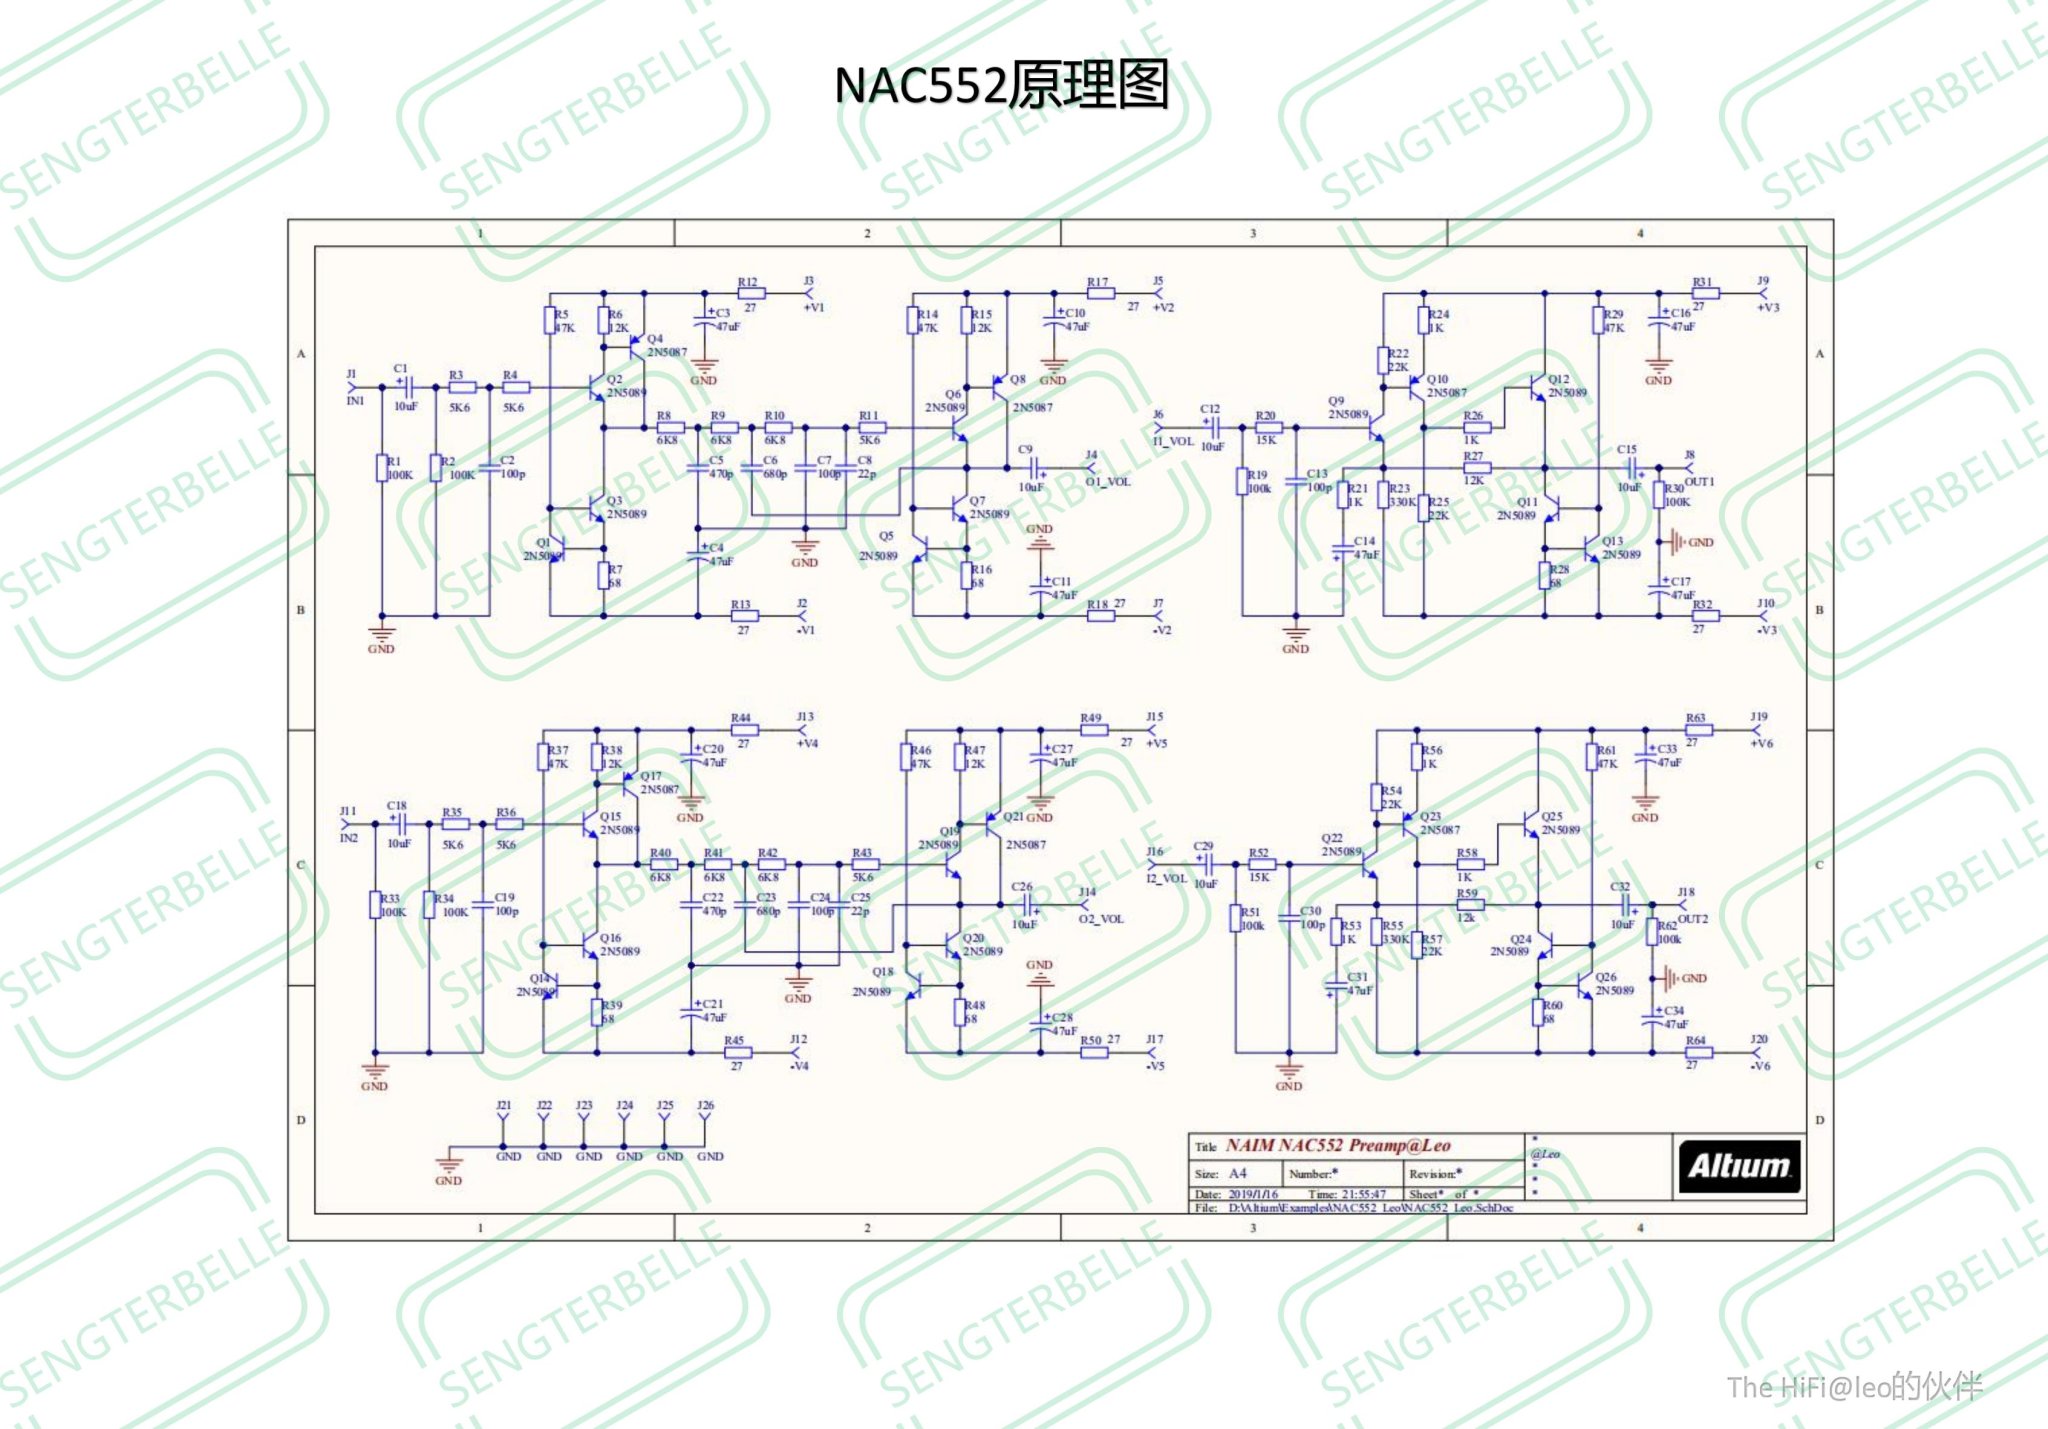 NAC552 scheme.jpg